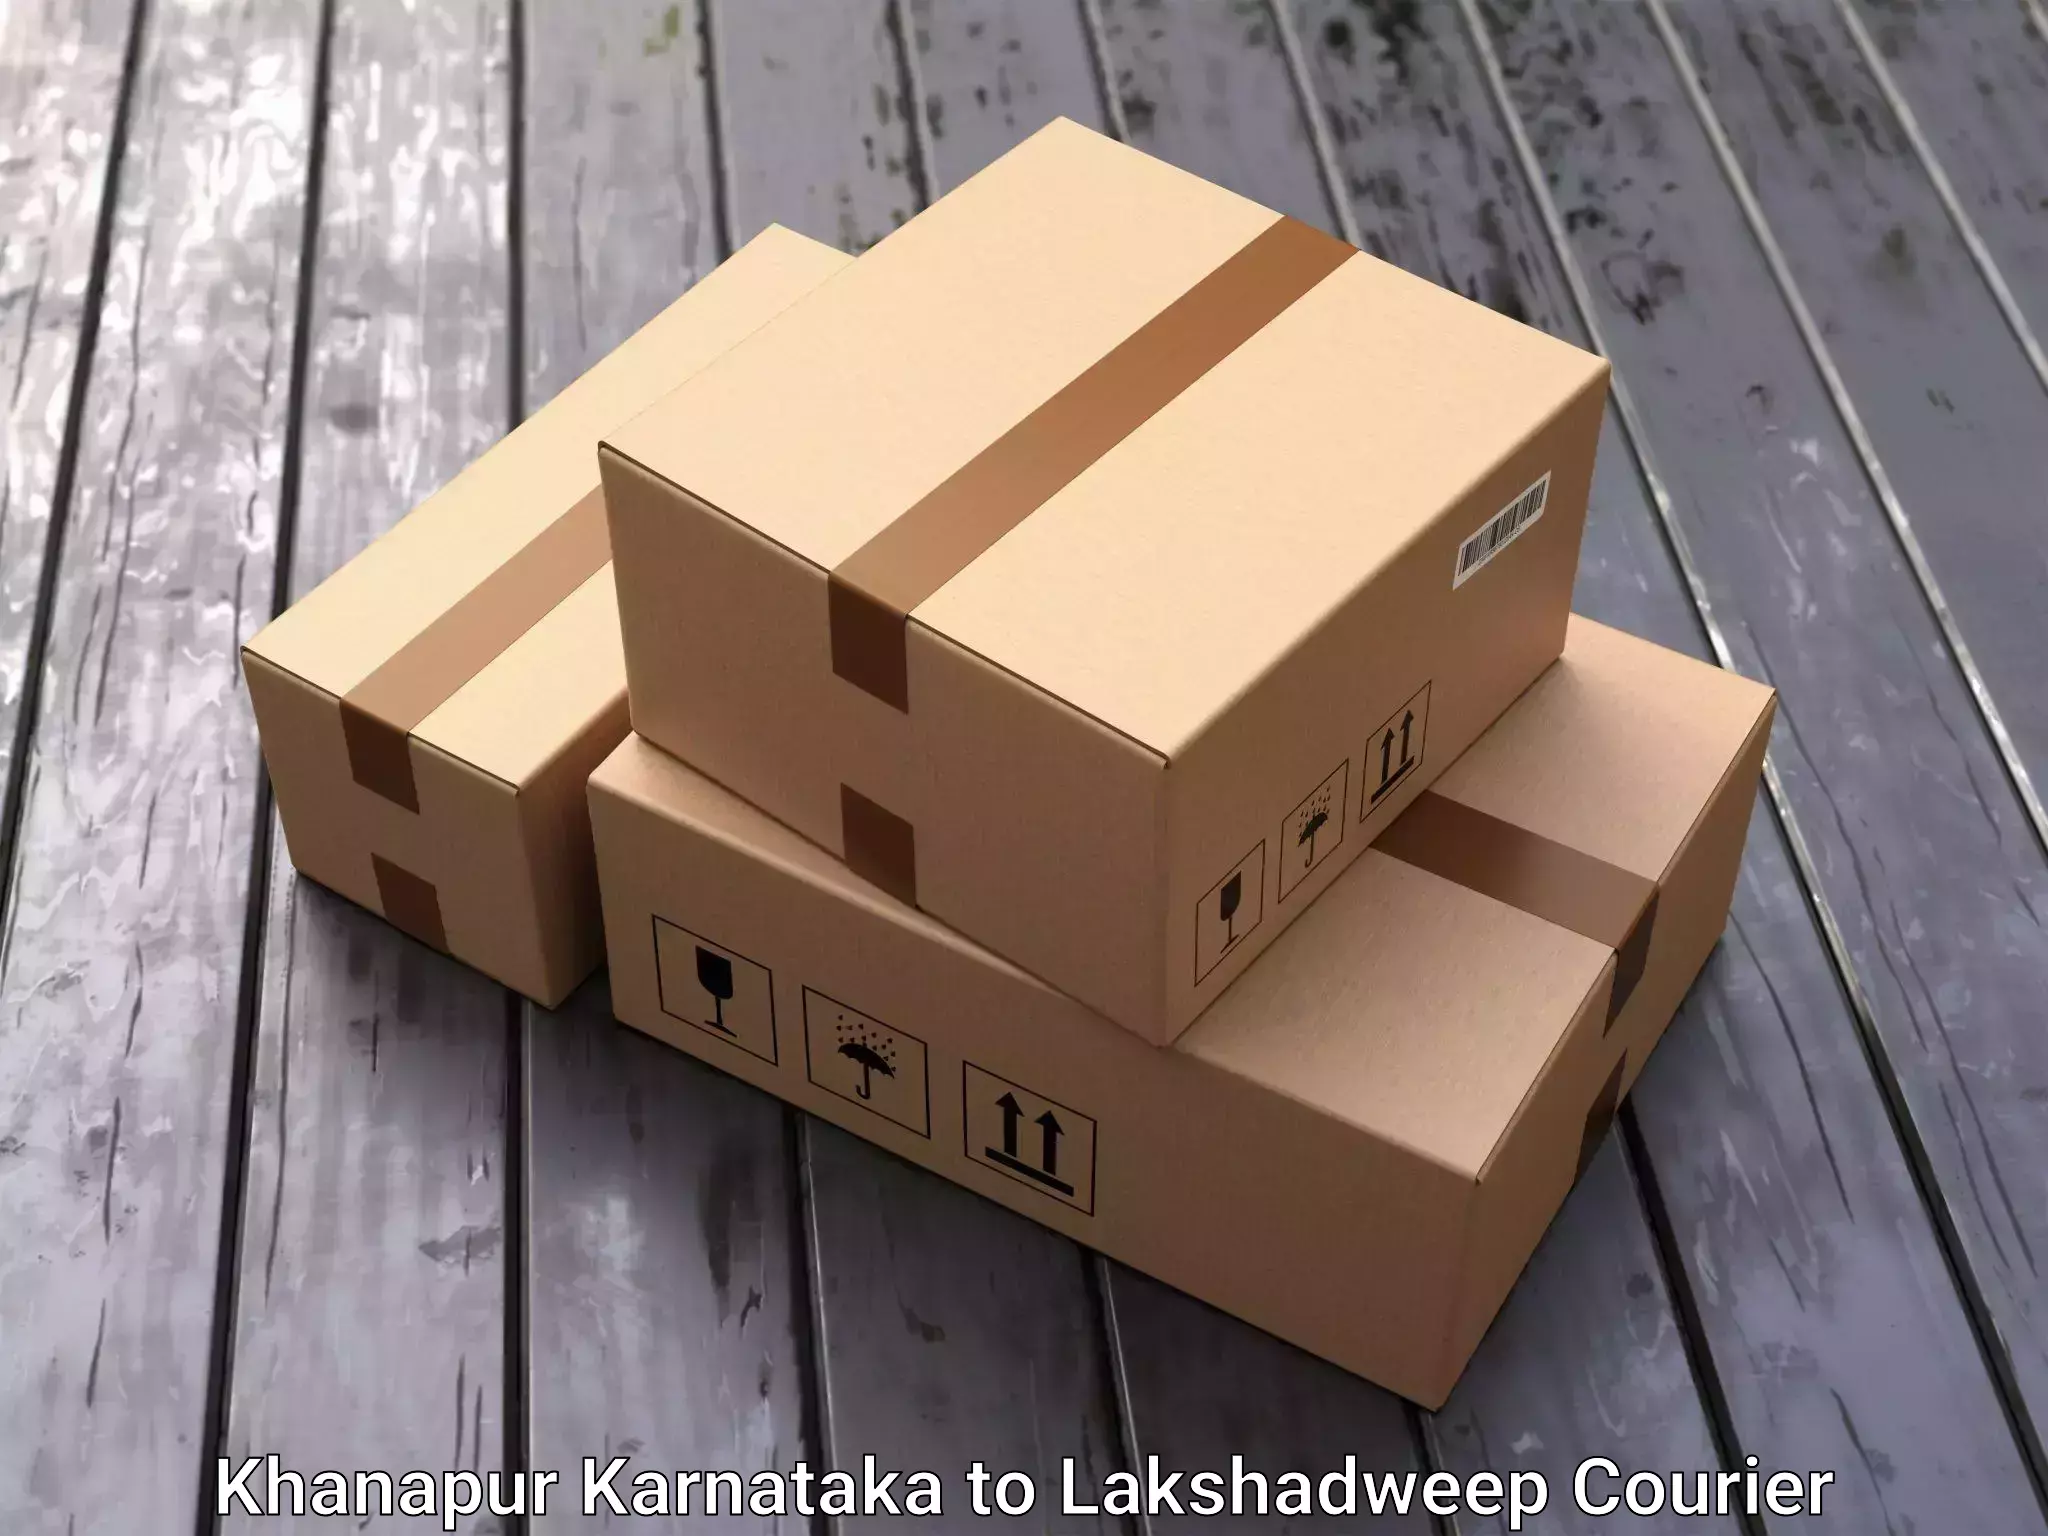 Specialized moving company Khanapur Karnataka to Lakshadweep